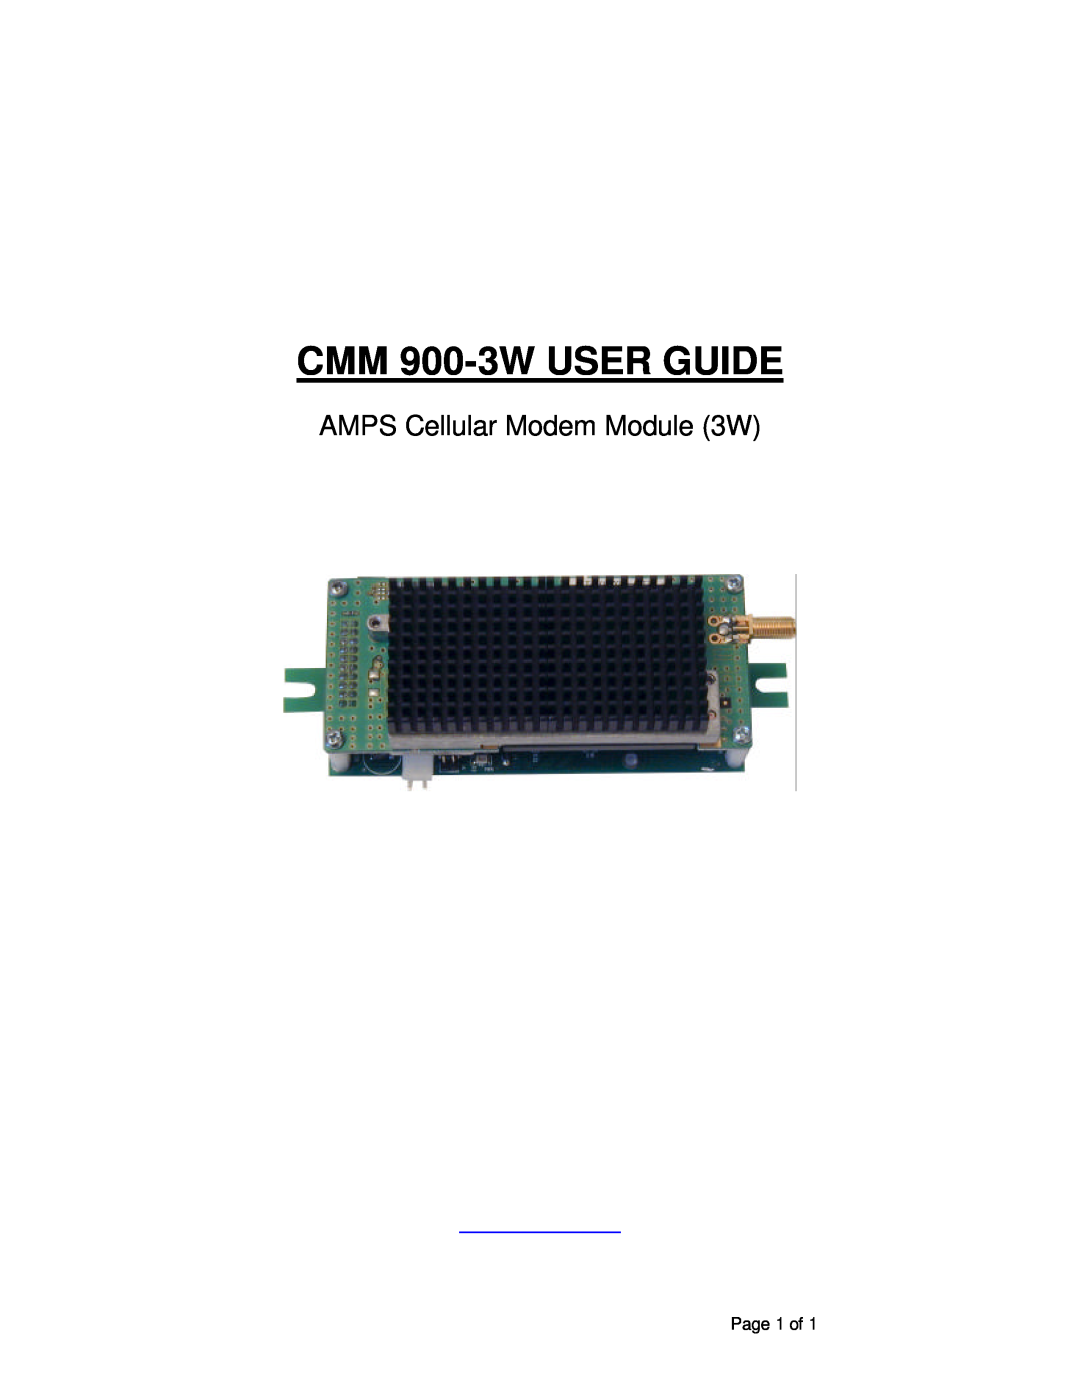 ATO manual CMM 900-3W USER GUIDE, AMPS Cellular Modem Module 3W 